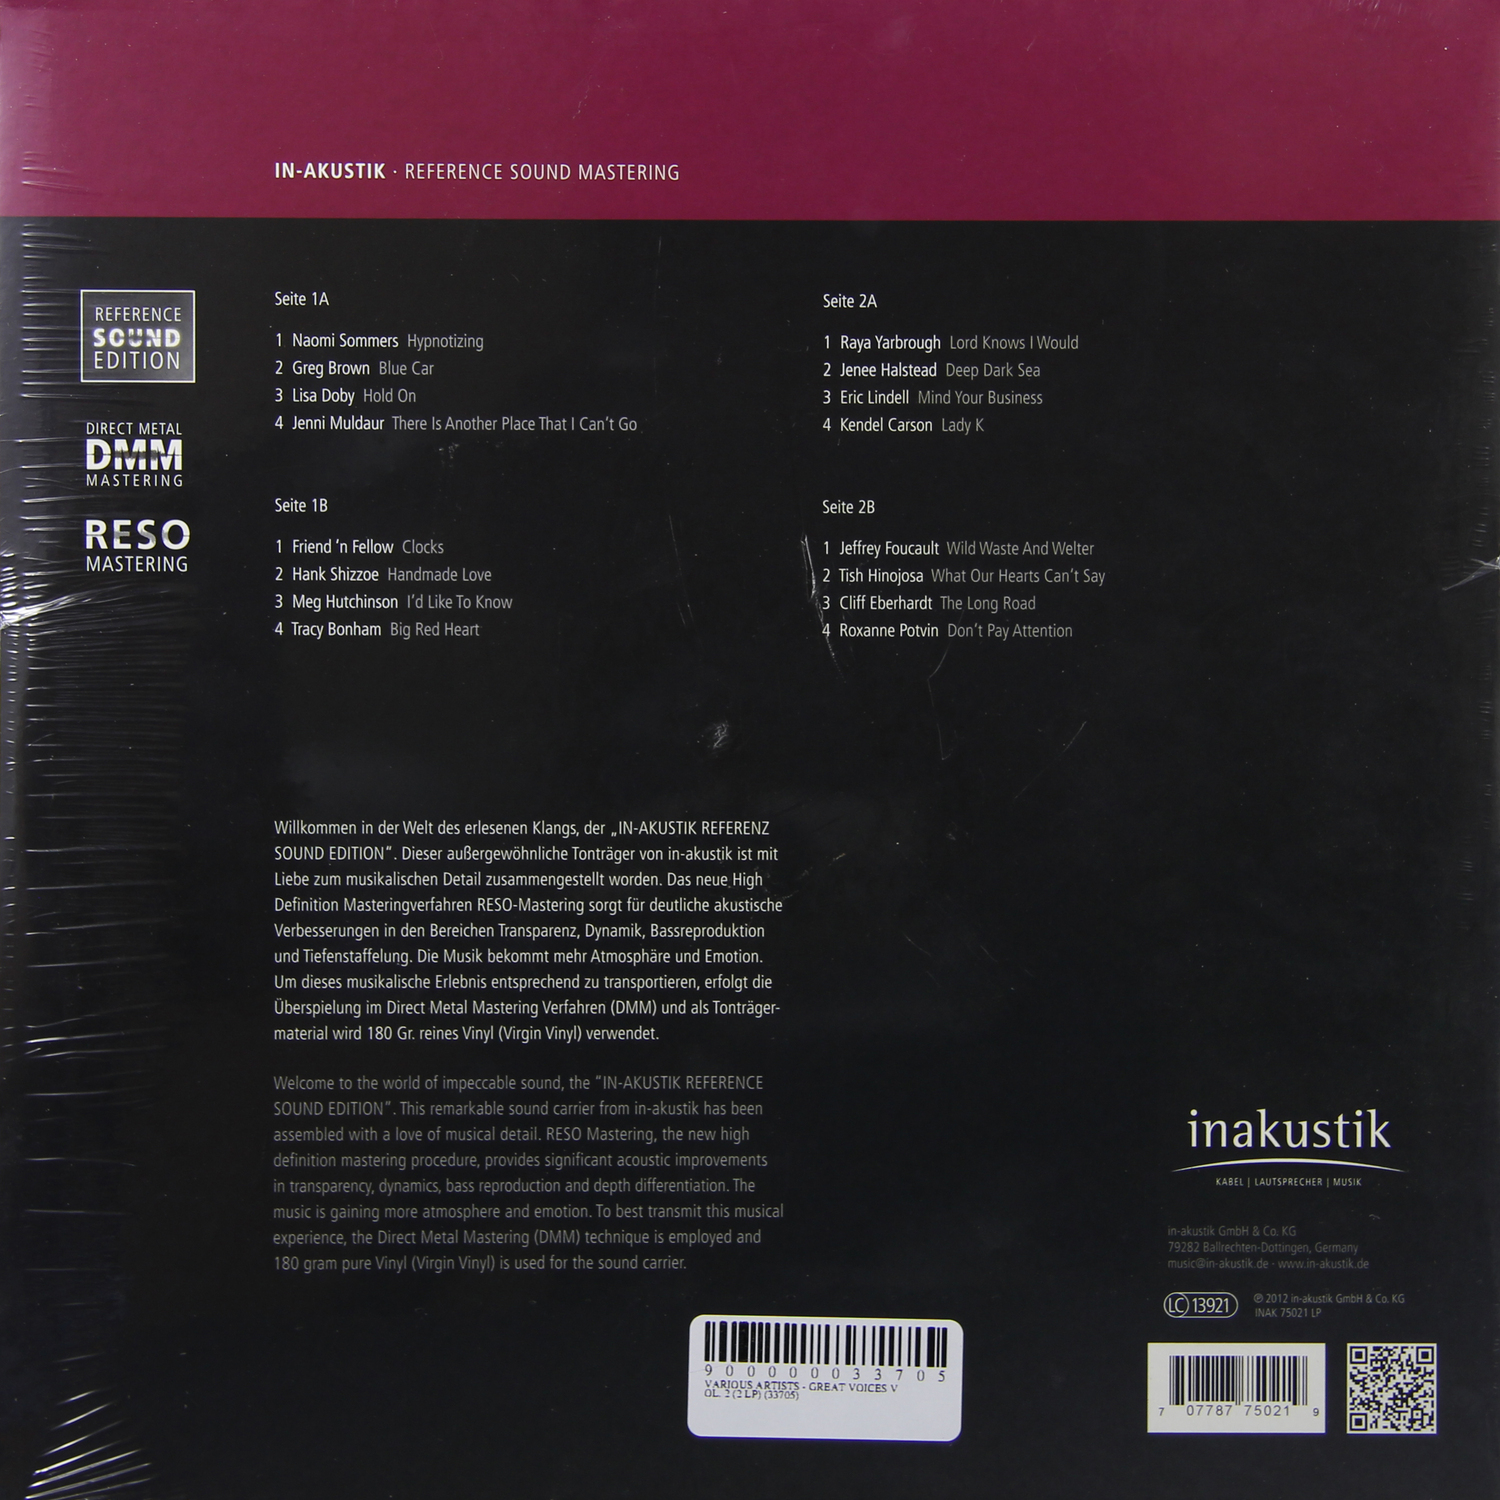 In-Akustik reference Sound Edition.. Пластинка Inakustik 01678021 the Voice of Elac (LP). Great Voice. Various - Killabites Vol.2 LP Sampler.